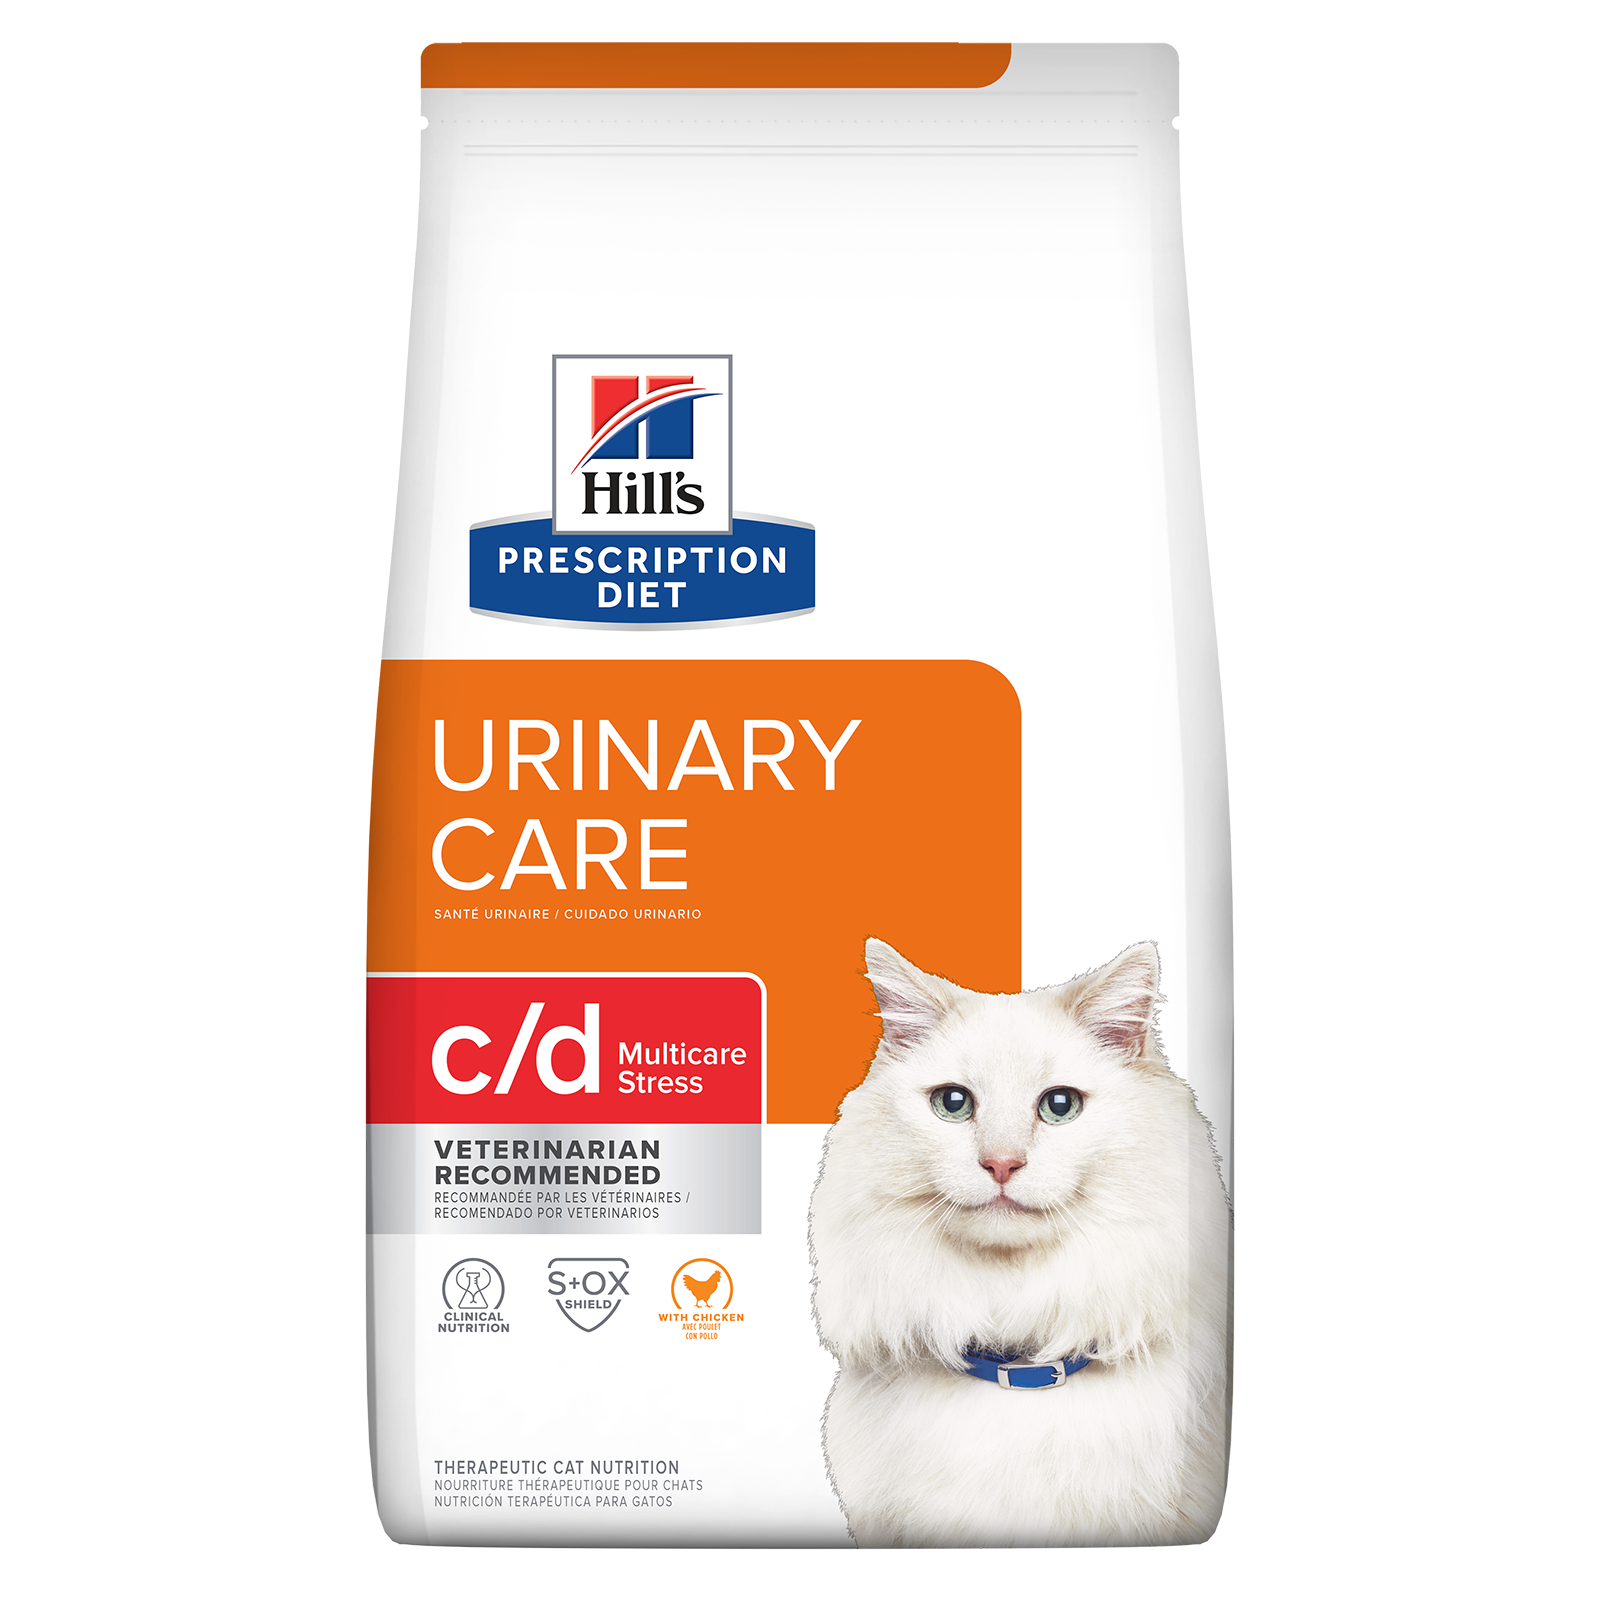 Hill's Prescription Diet Cat Food c/d Multicare Stress Urinary Care